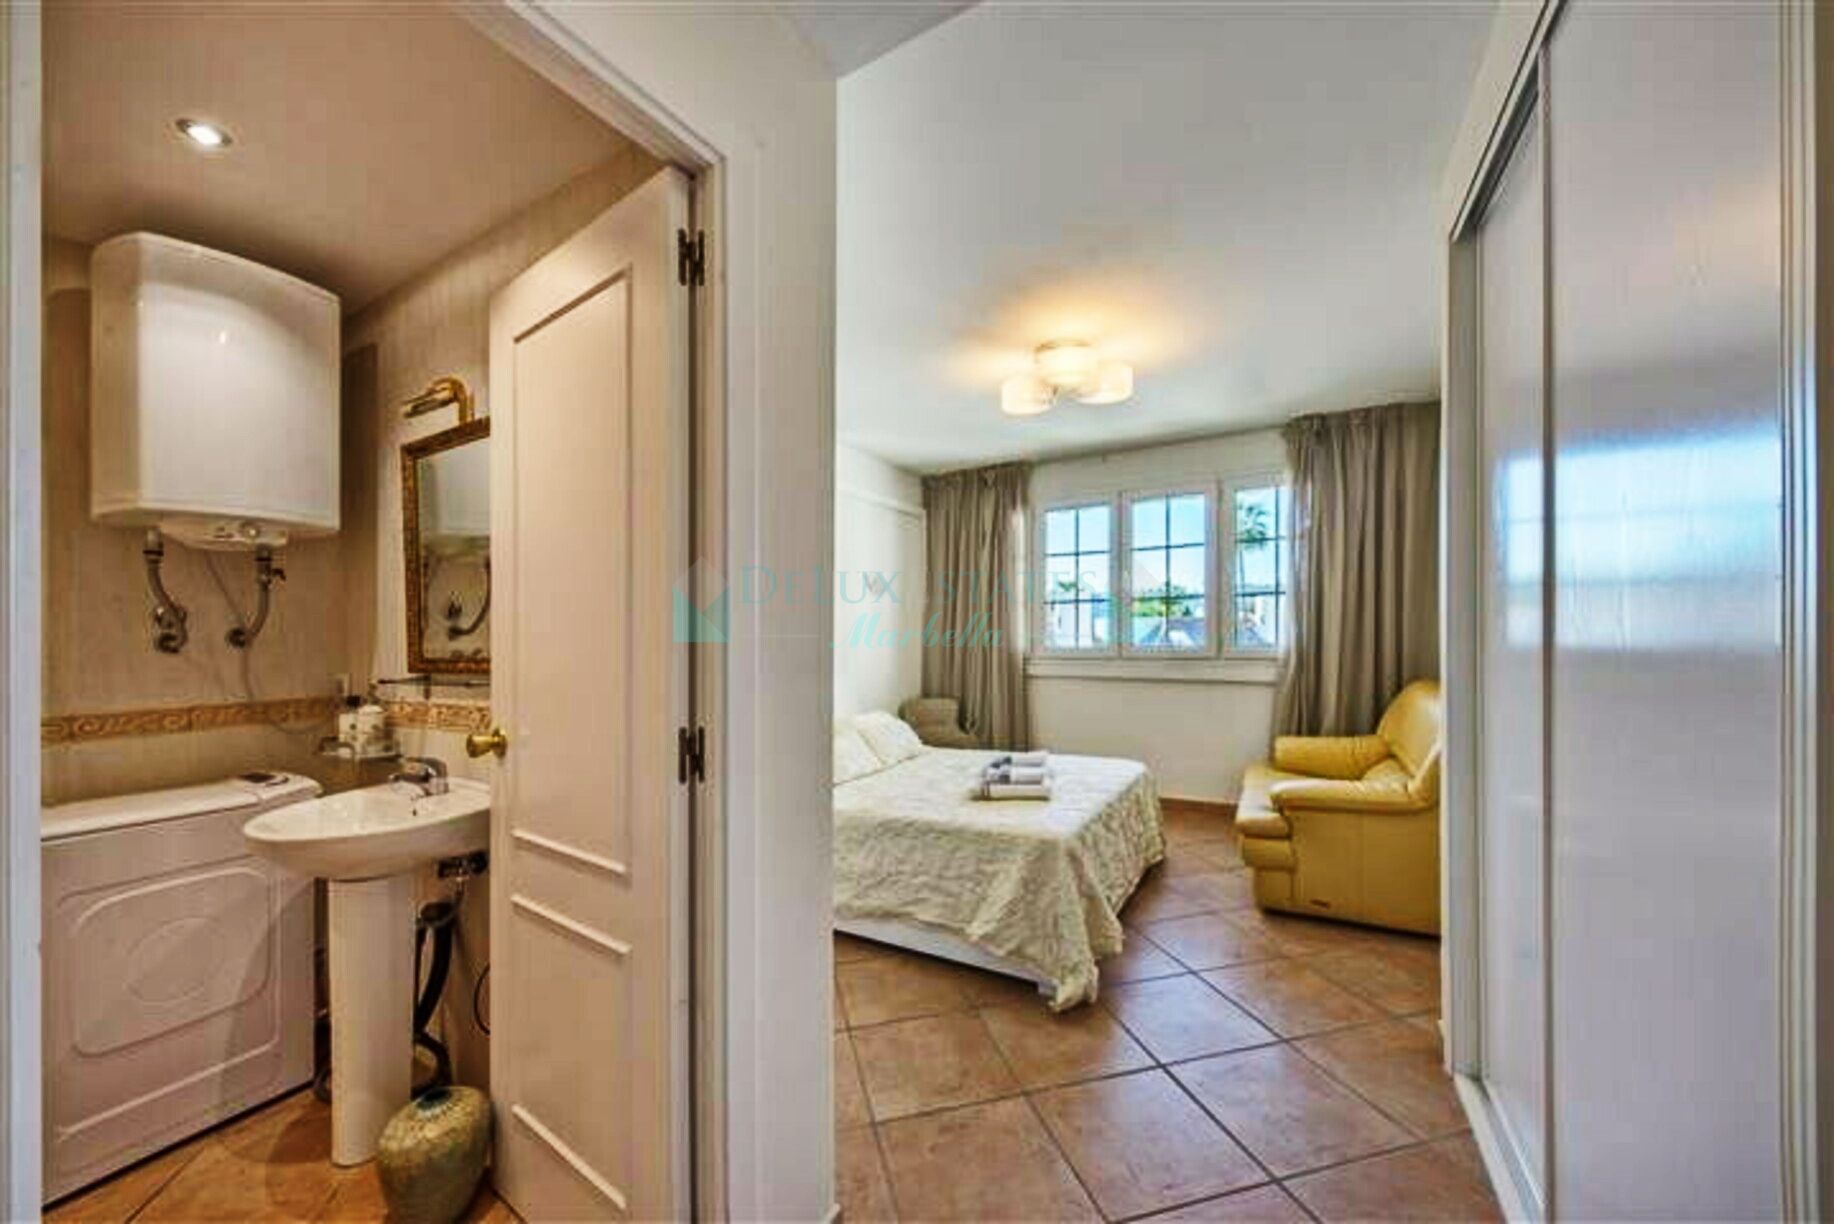 Apartment for sale in Villa Marina, Marbella - Puerto Banus